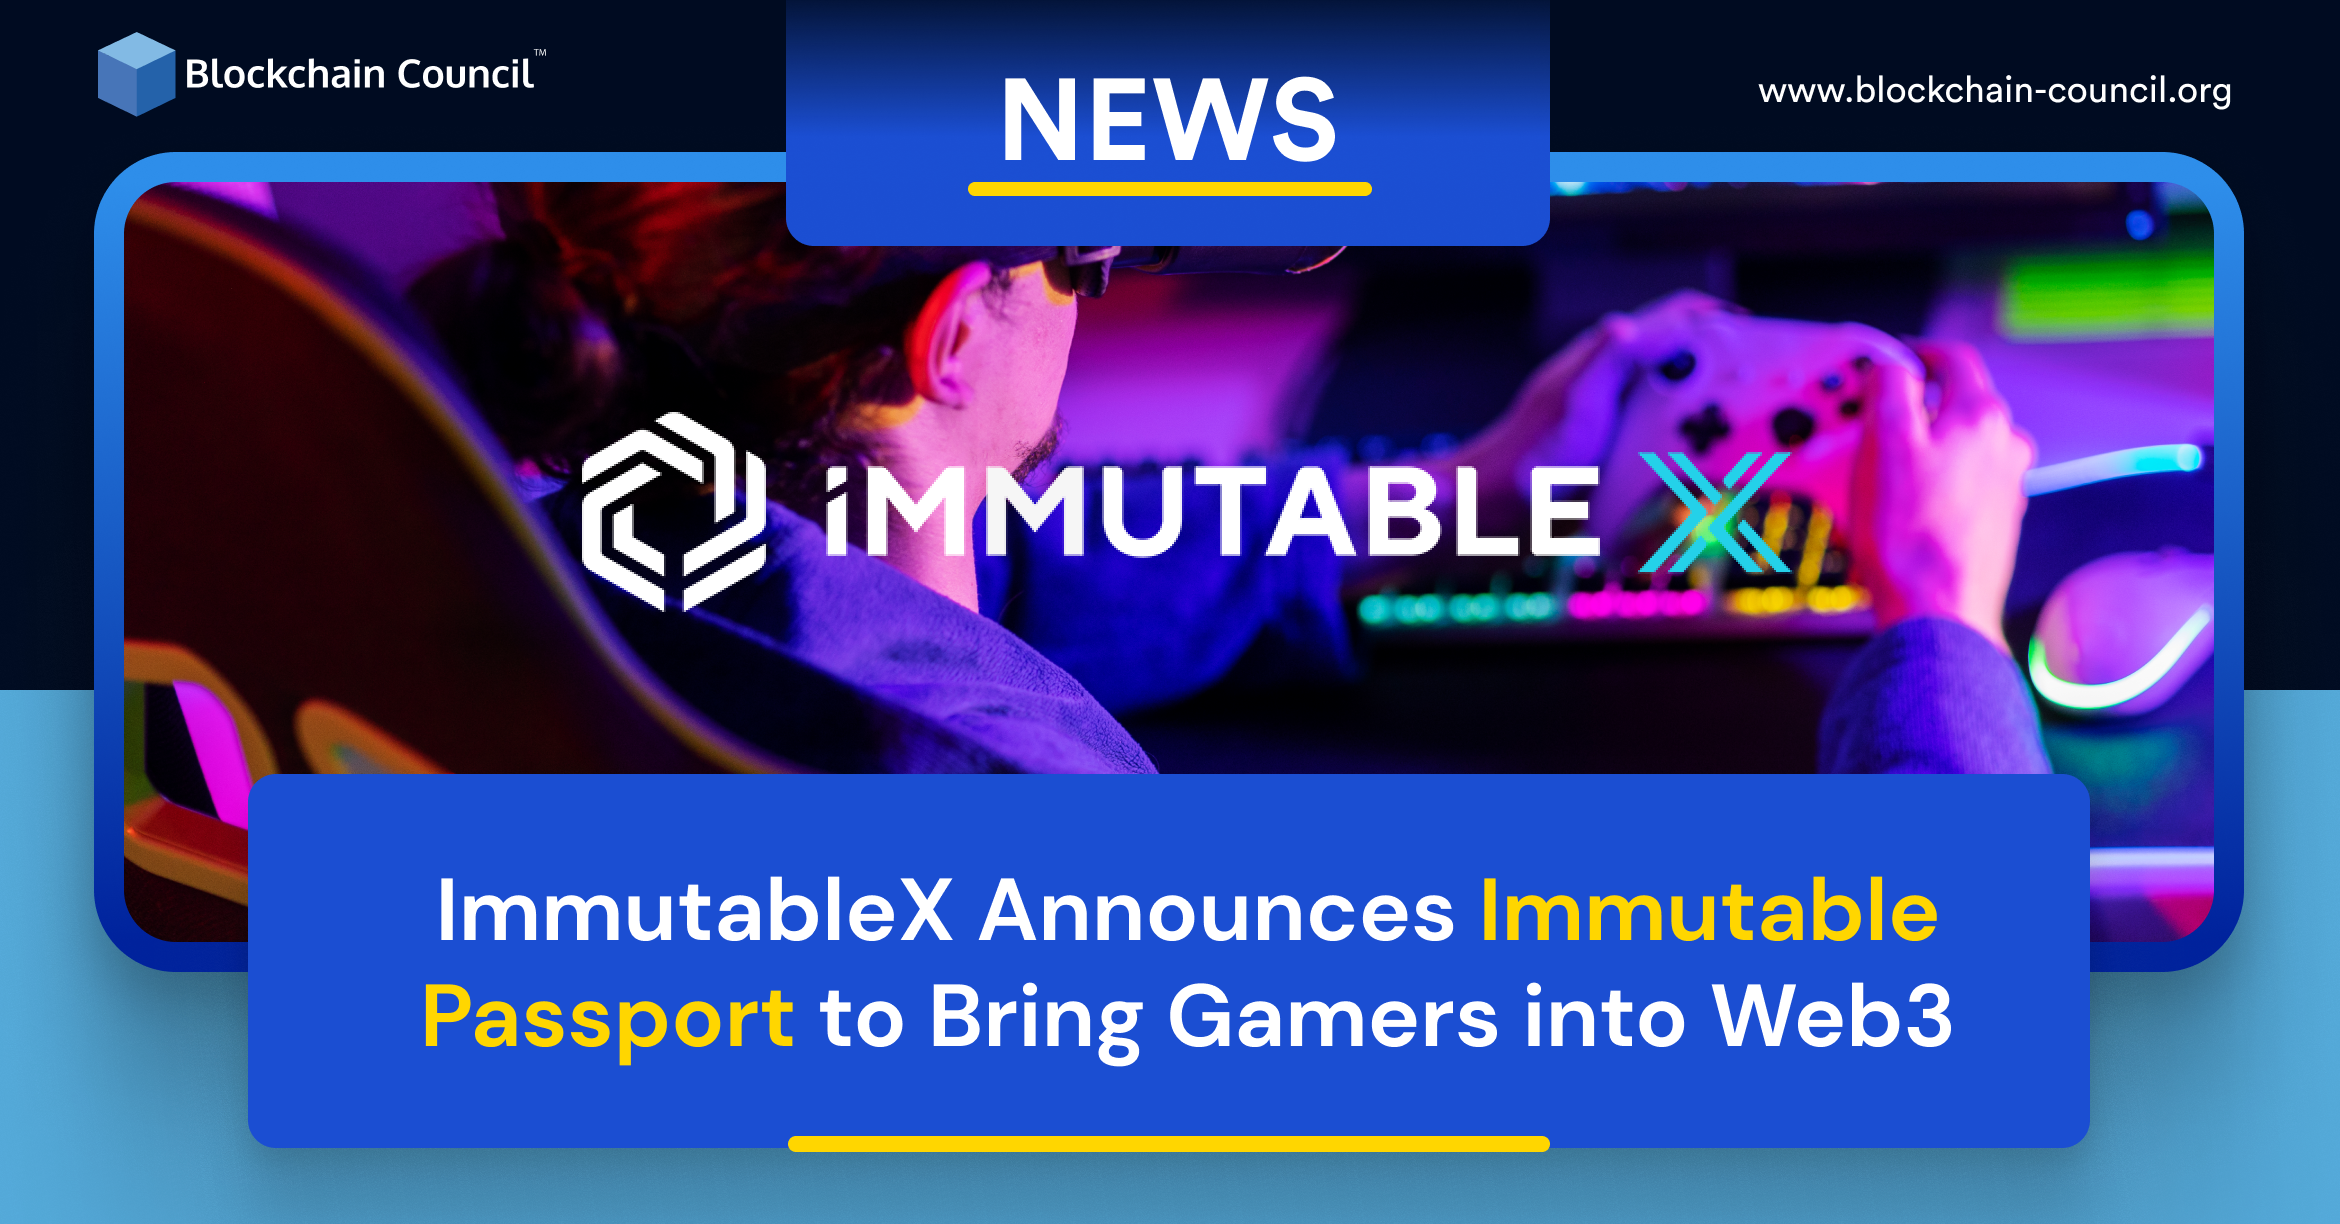 ImmutableX Announces Immutable Passport to Bring Gamers into Web3